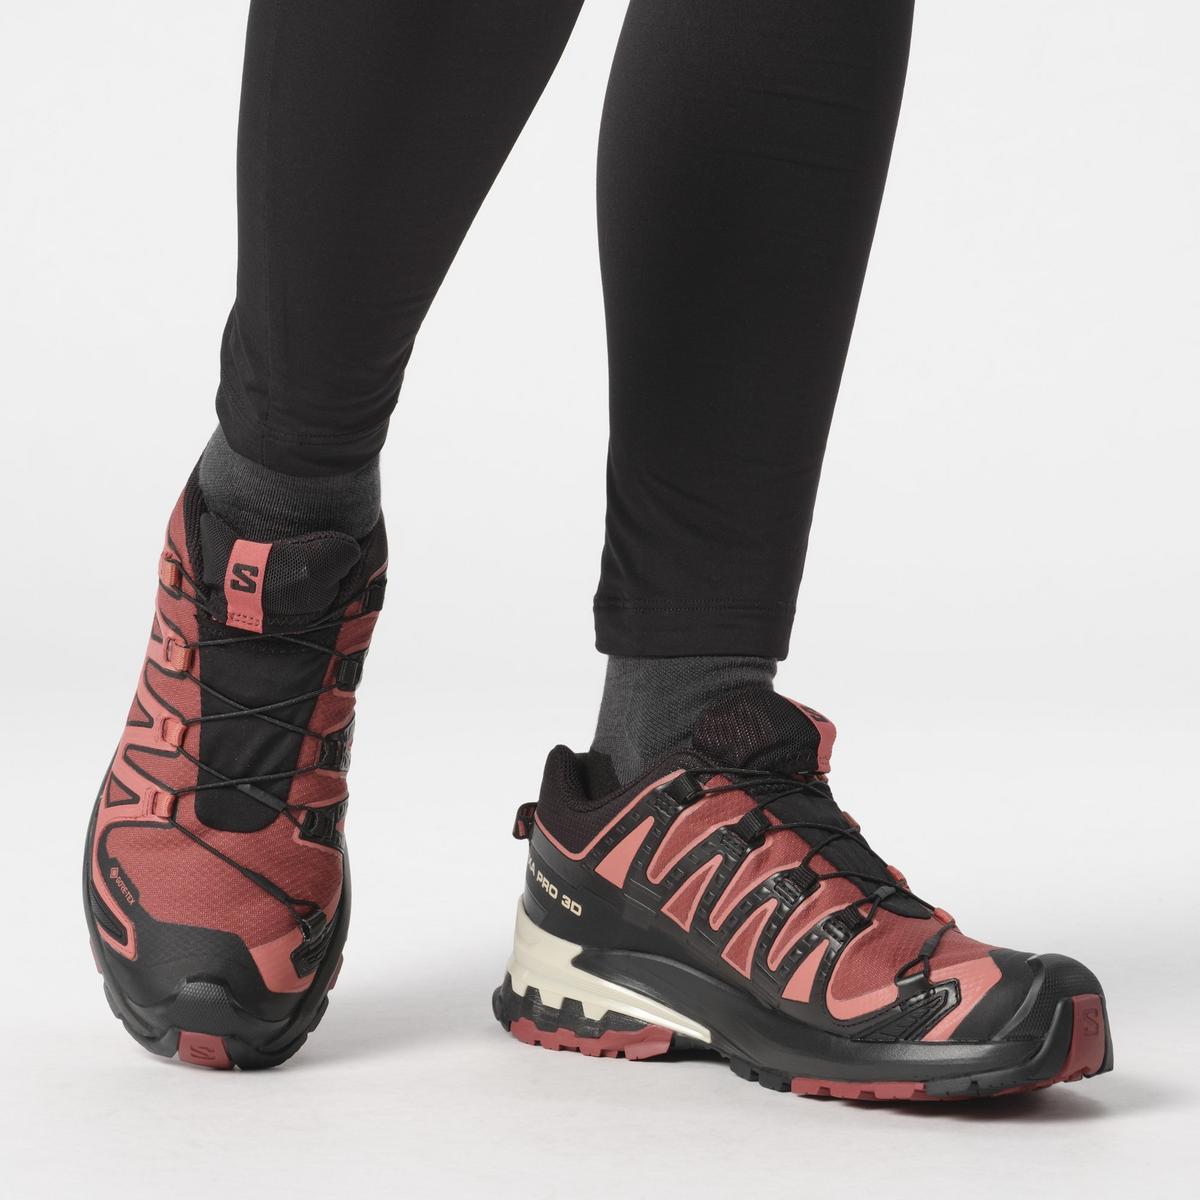 Salomon Women's XA Pro 3D V9 GORE-TEX Trail Running Shoes - Pink